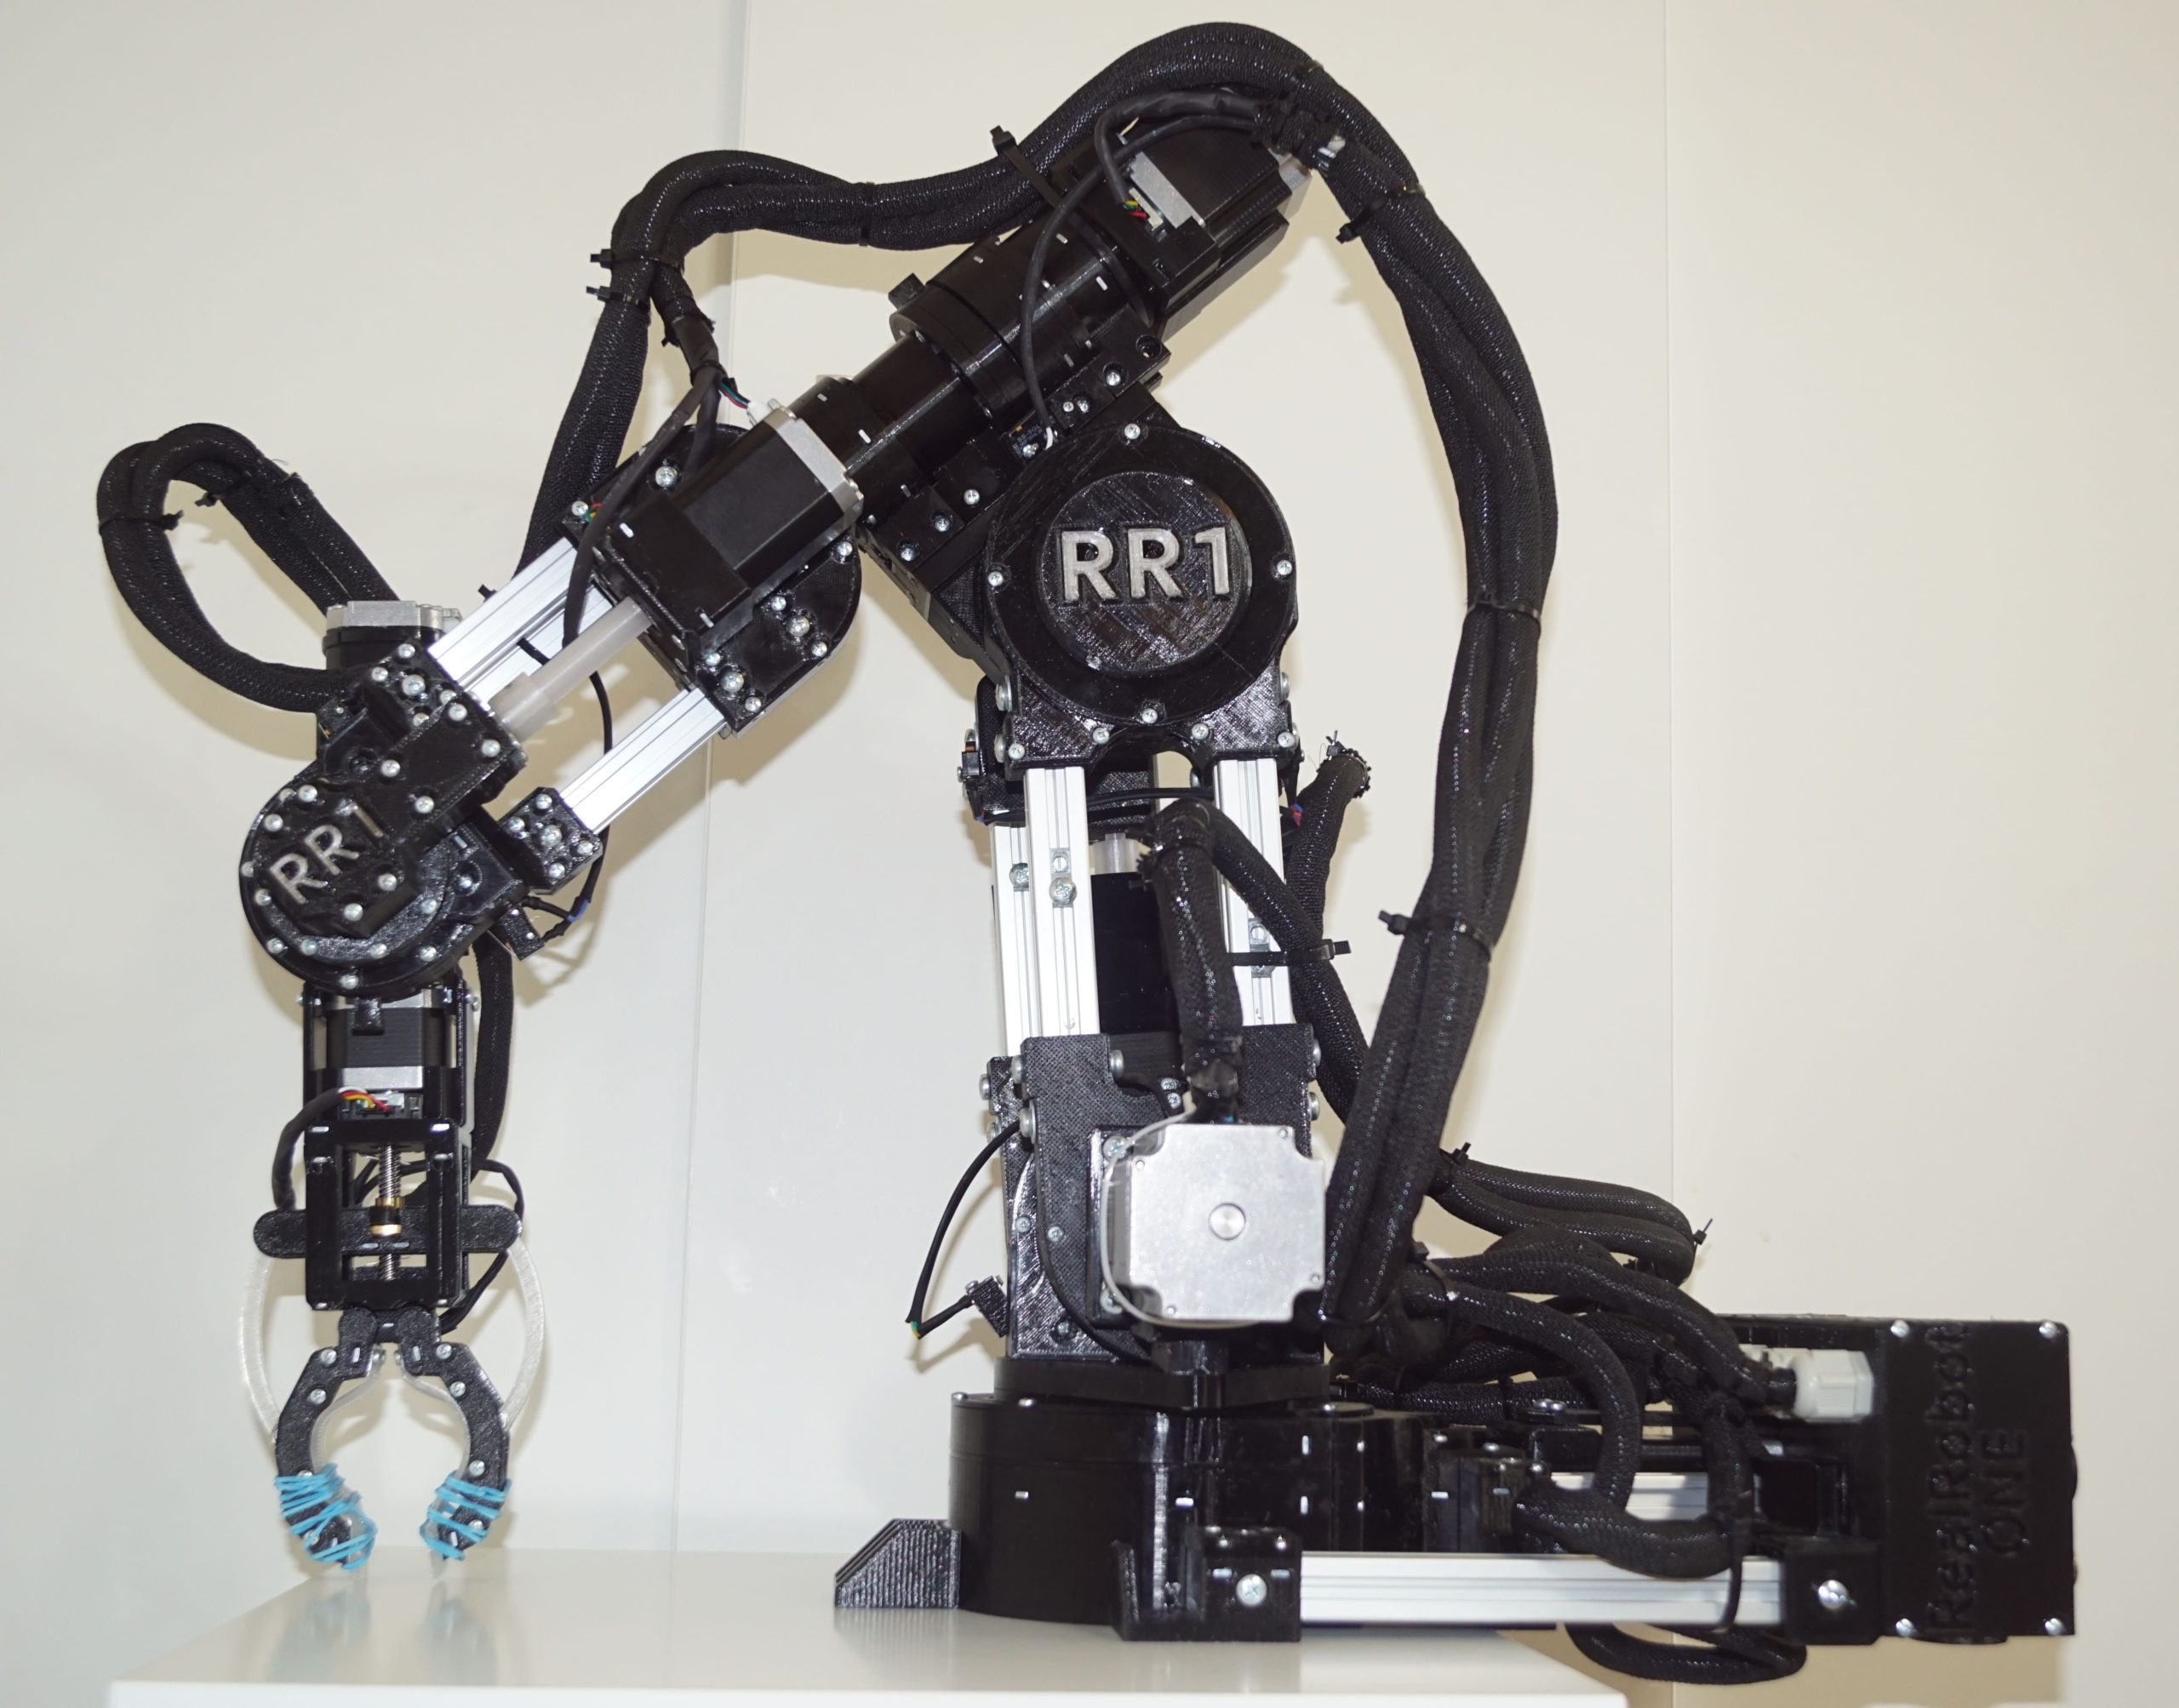 Real Robot One عبارة عن ذراع آلية عالية الأداء يمكنك بناءها بنفسك